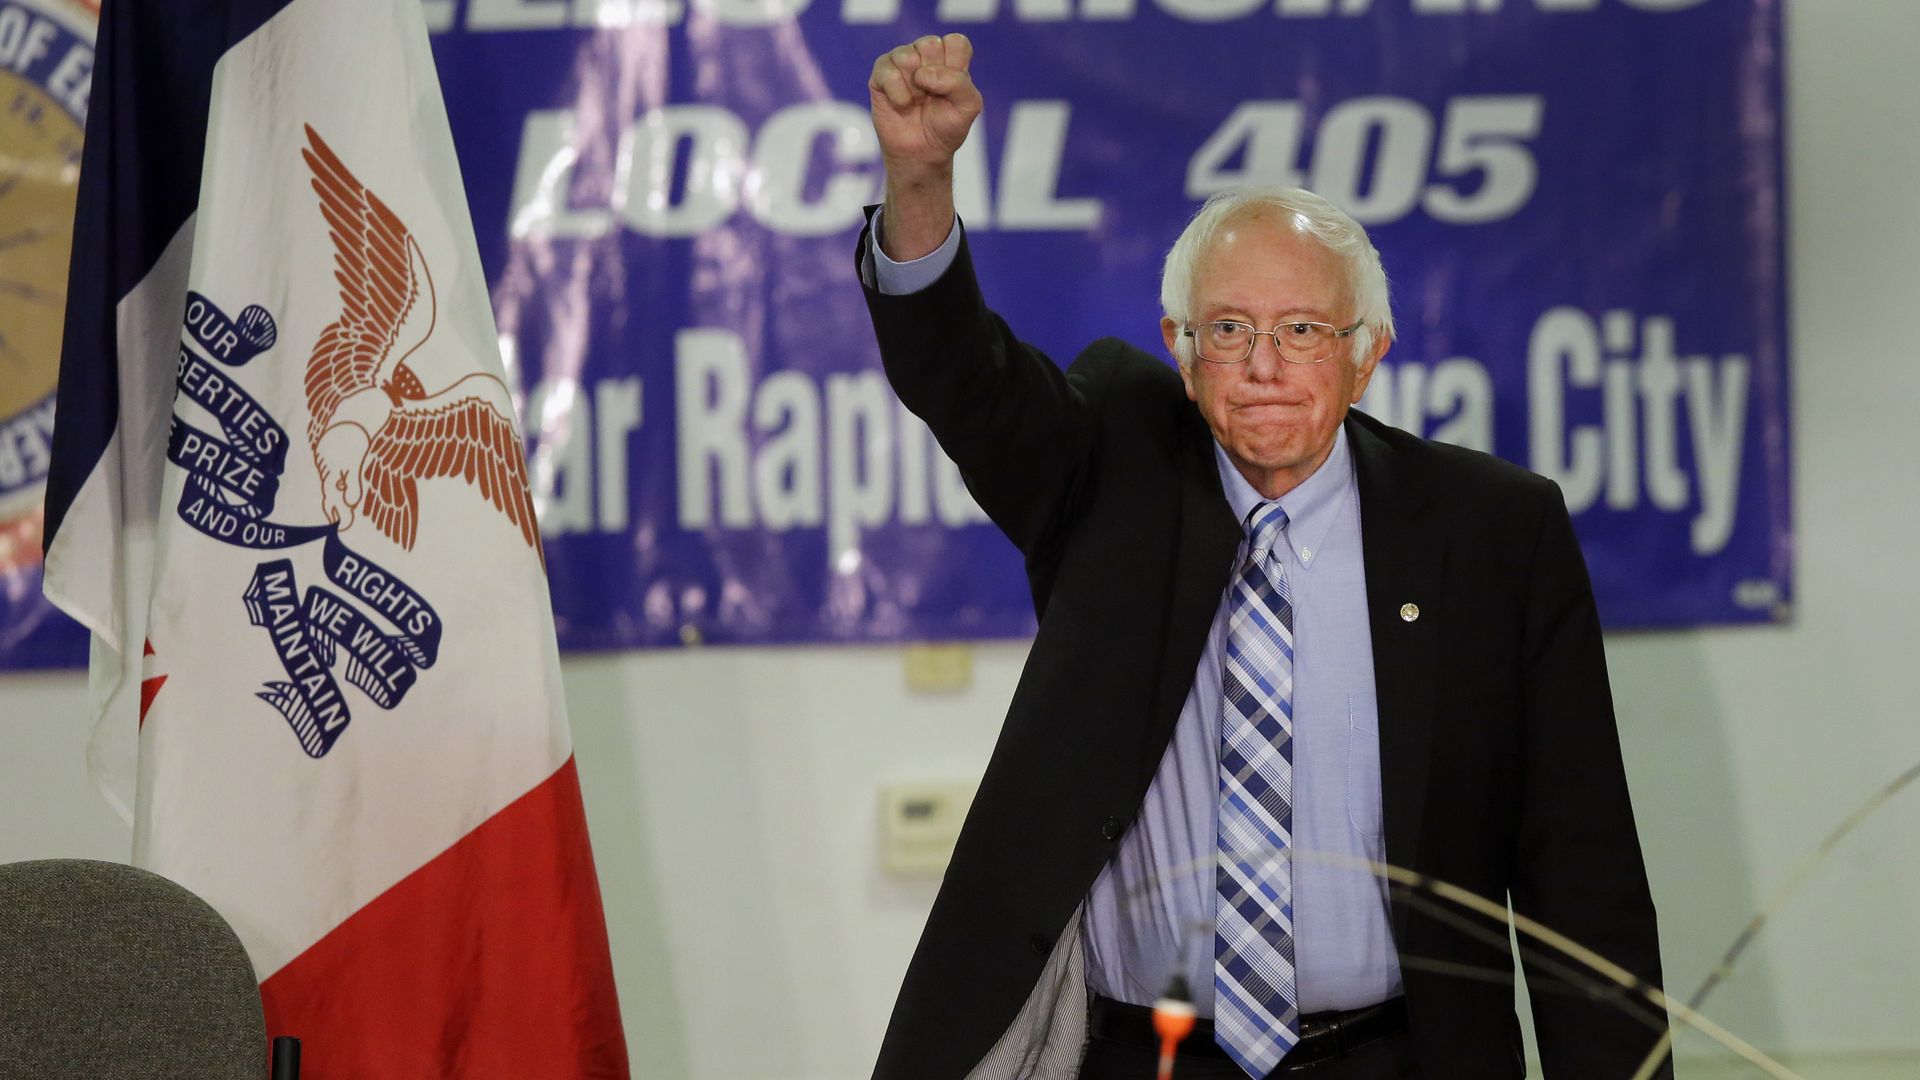 Bernie Sanders raises a fist at a crowd.